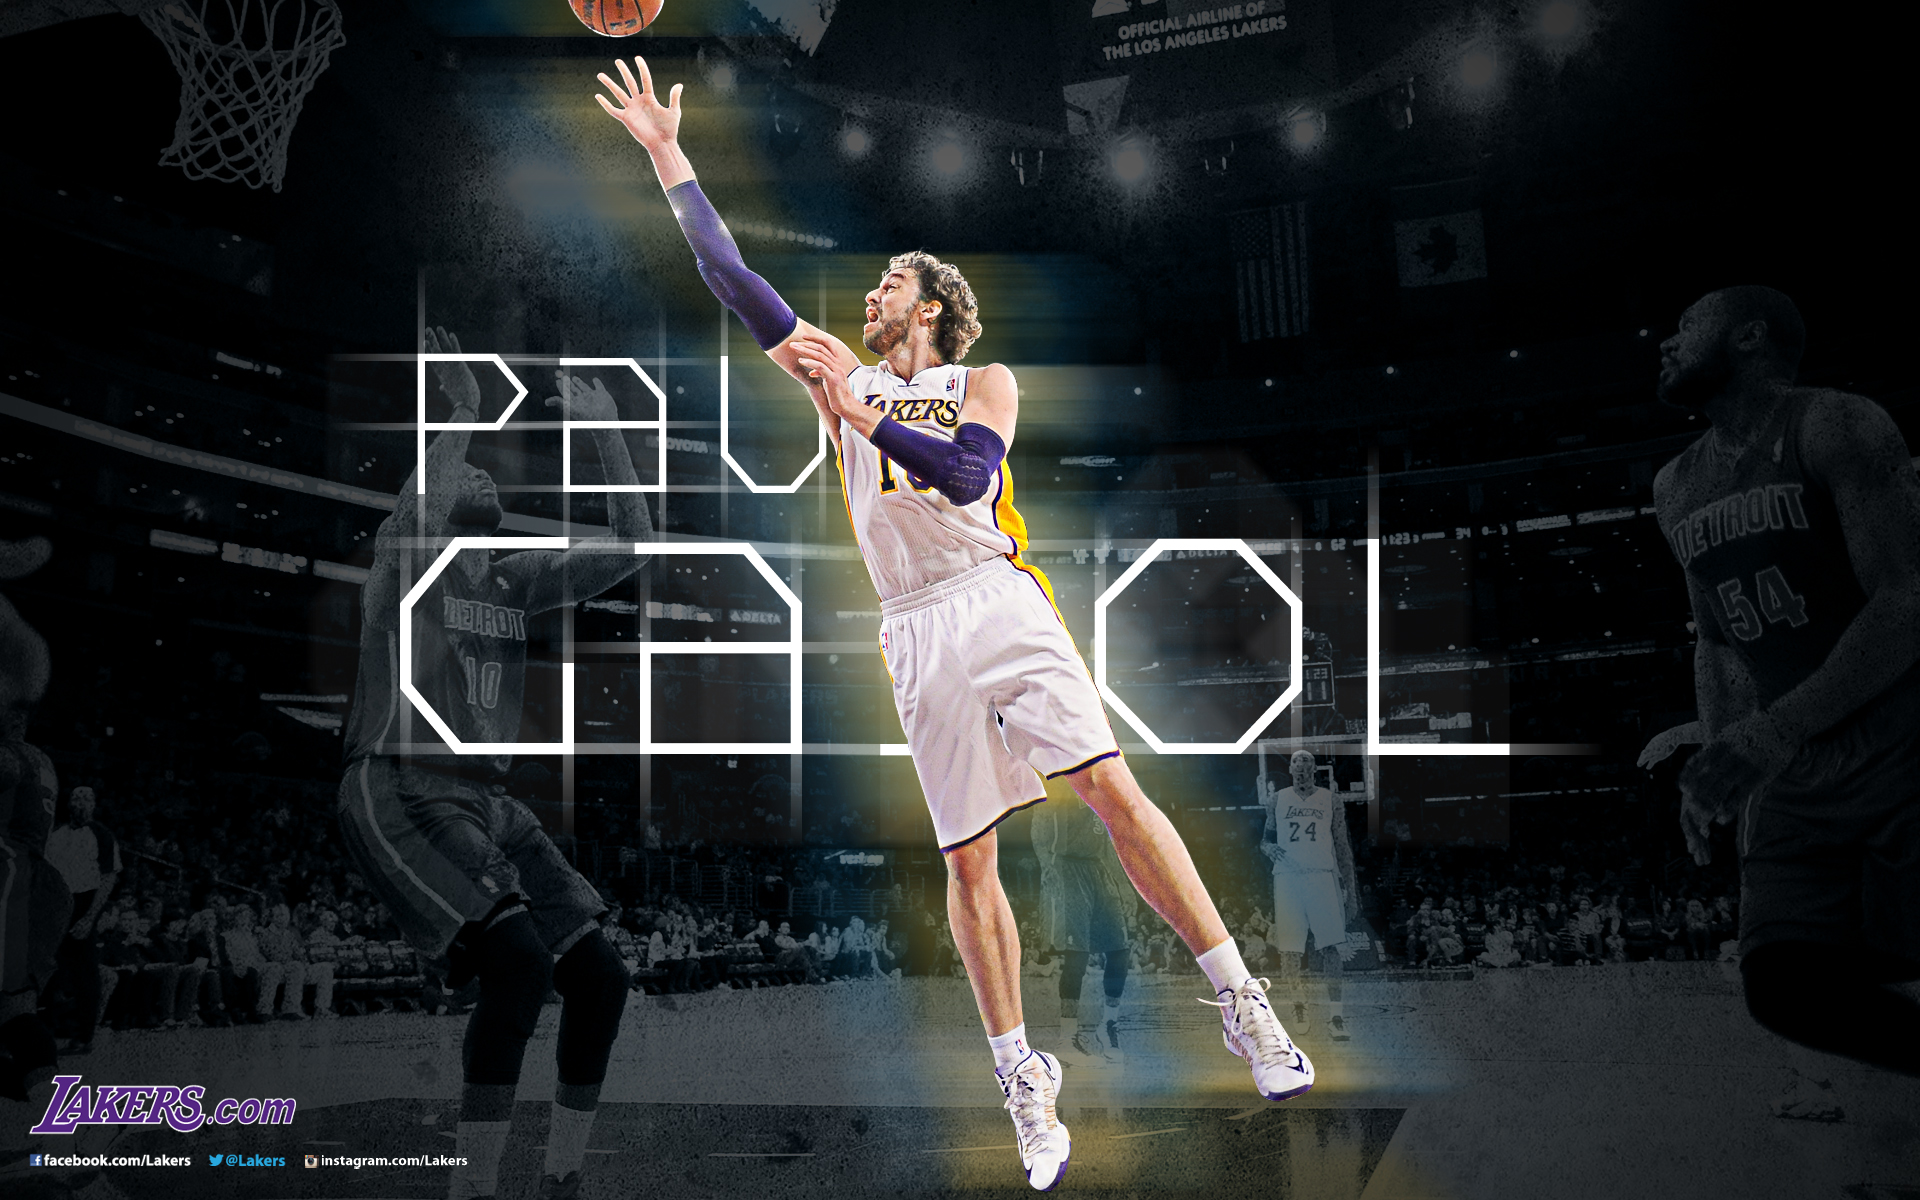 2013 14 Profile: Pau Gasol. Los Angeles Lakers